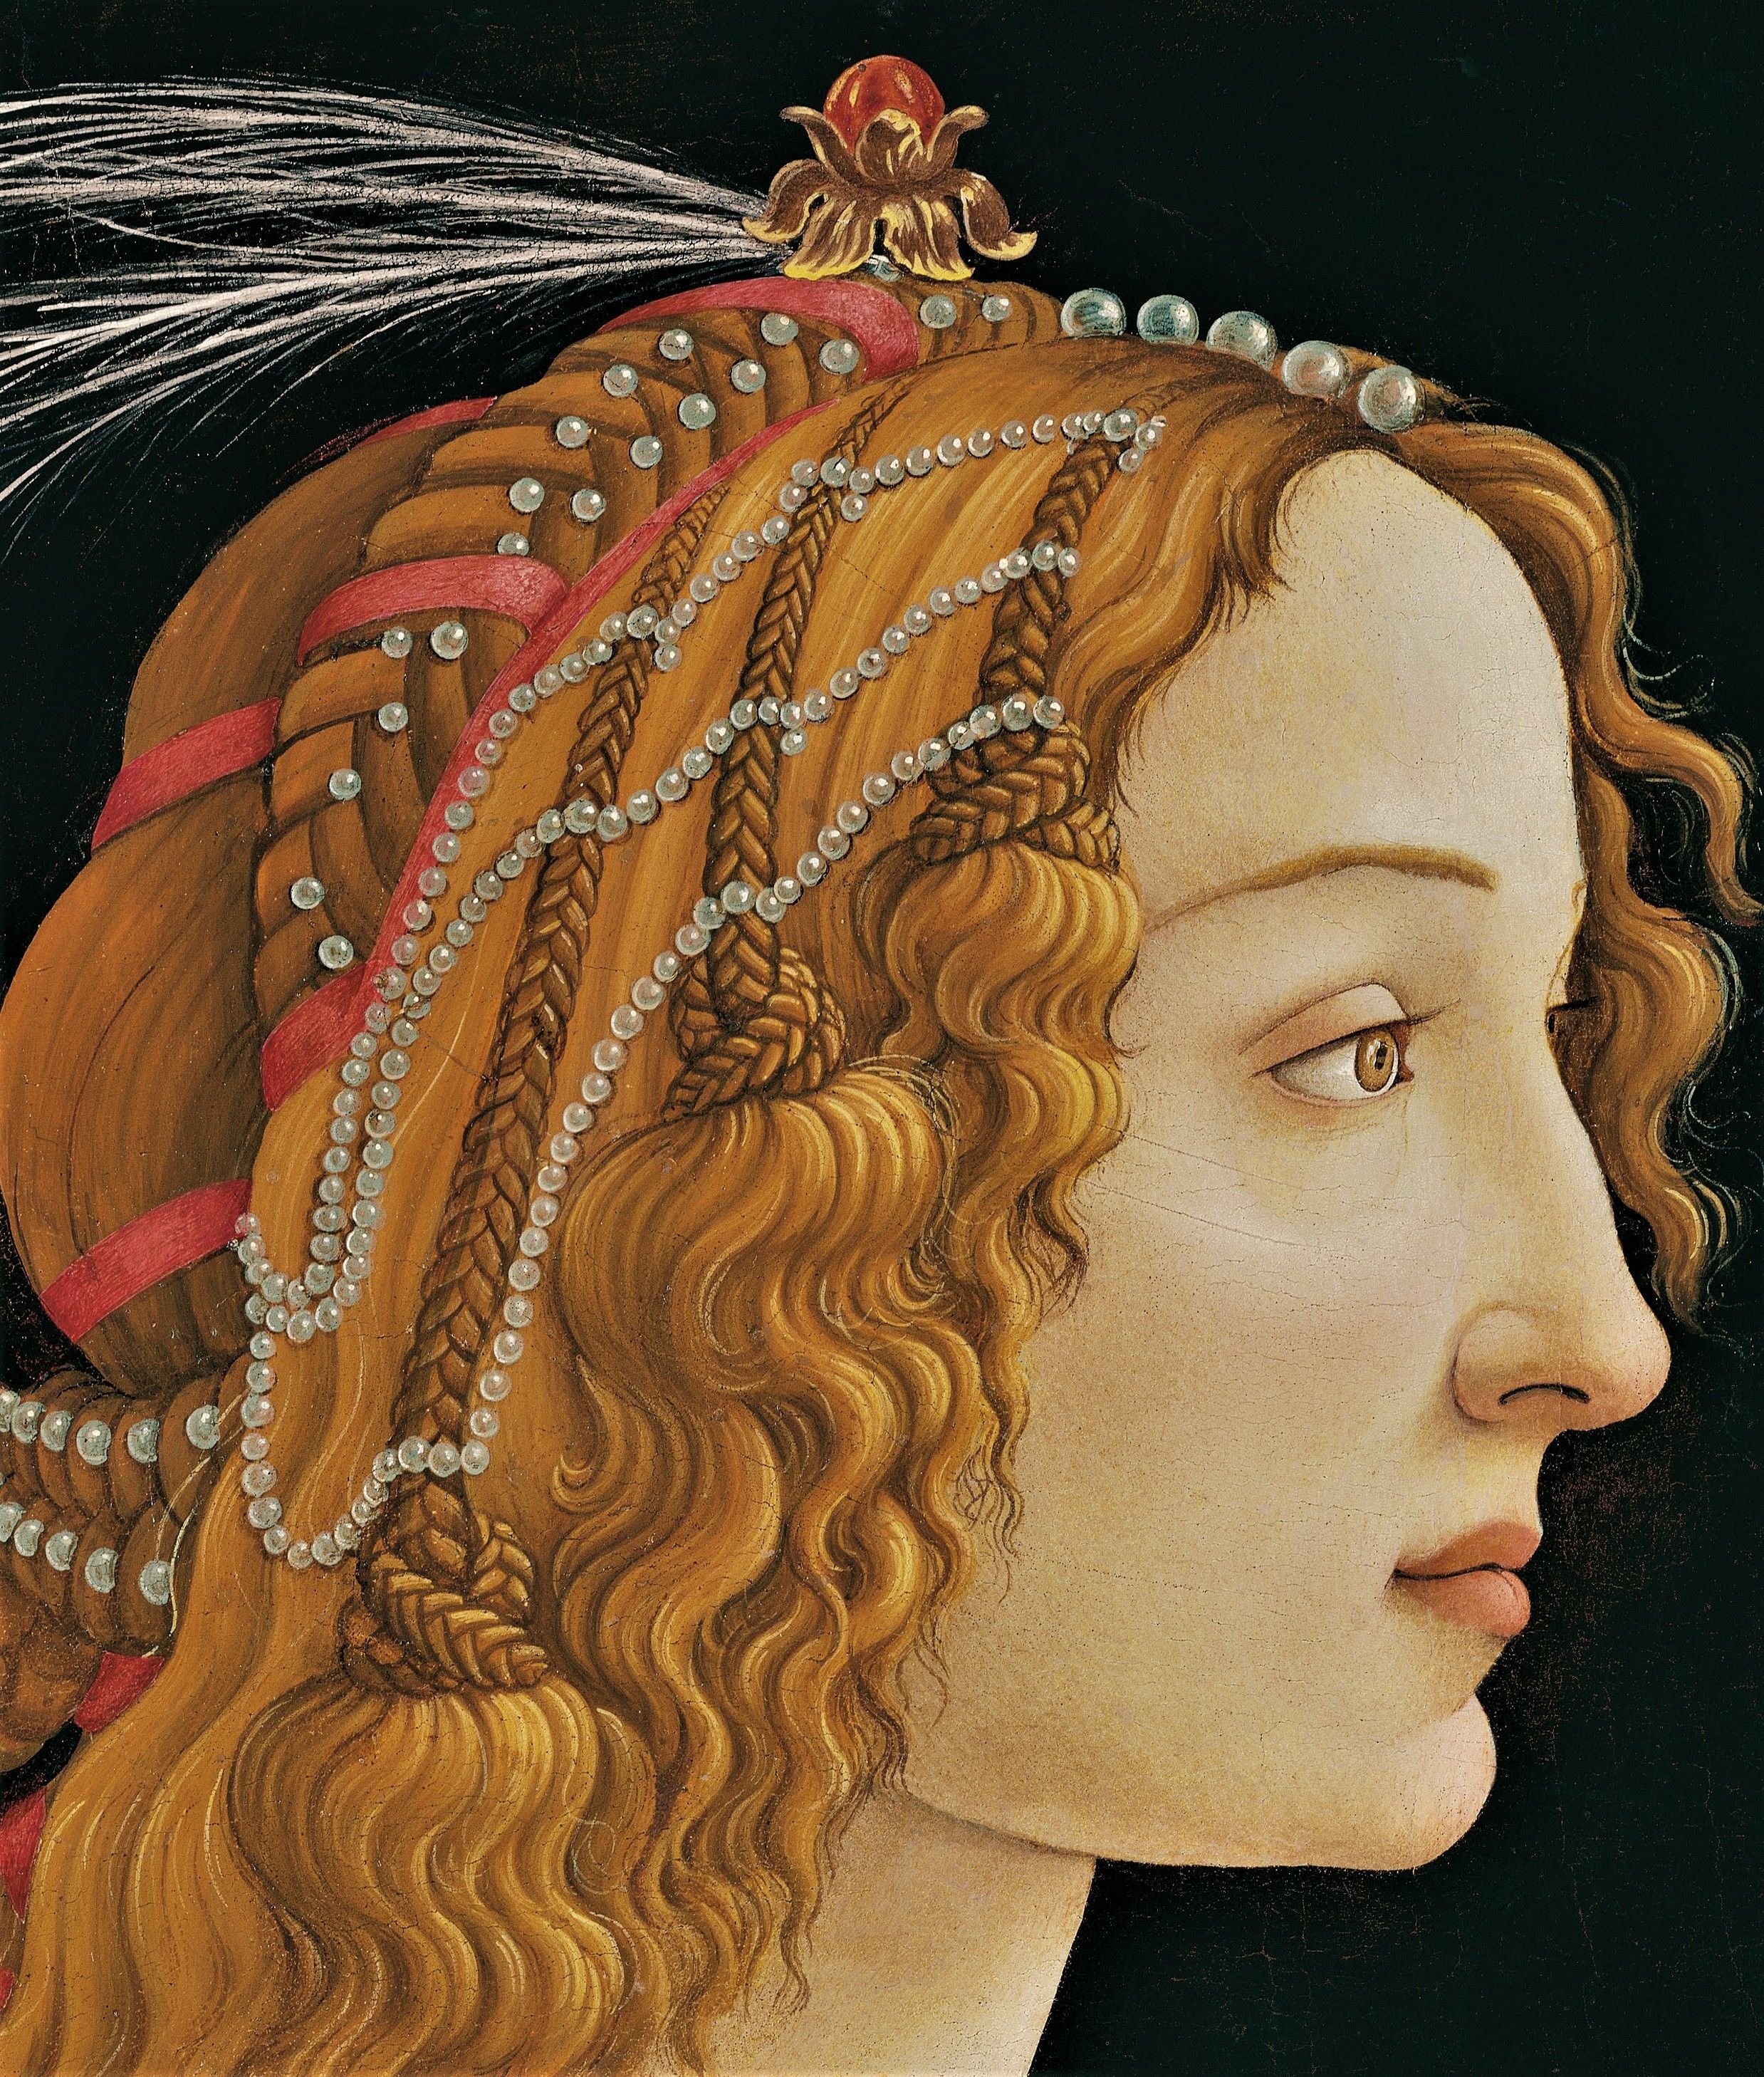 Образ ренессанс. Симонетта Веспуччи Боттичелли. Боттичелли портрет Симонетты Веспуччи. Симонетта Веспуччи (1453-1476 г.г.). Симонетта Веспуччи портрет.